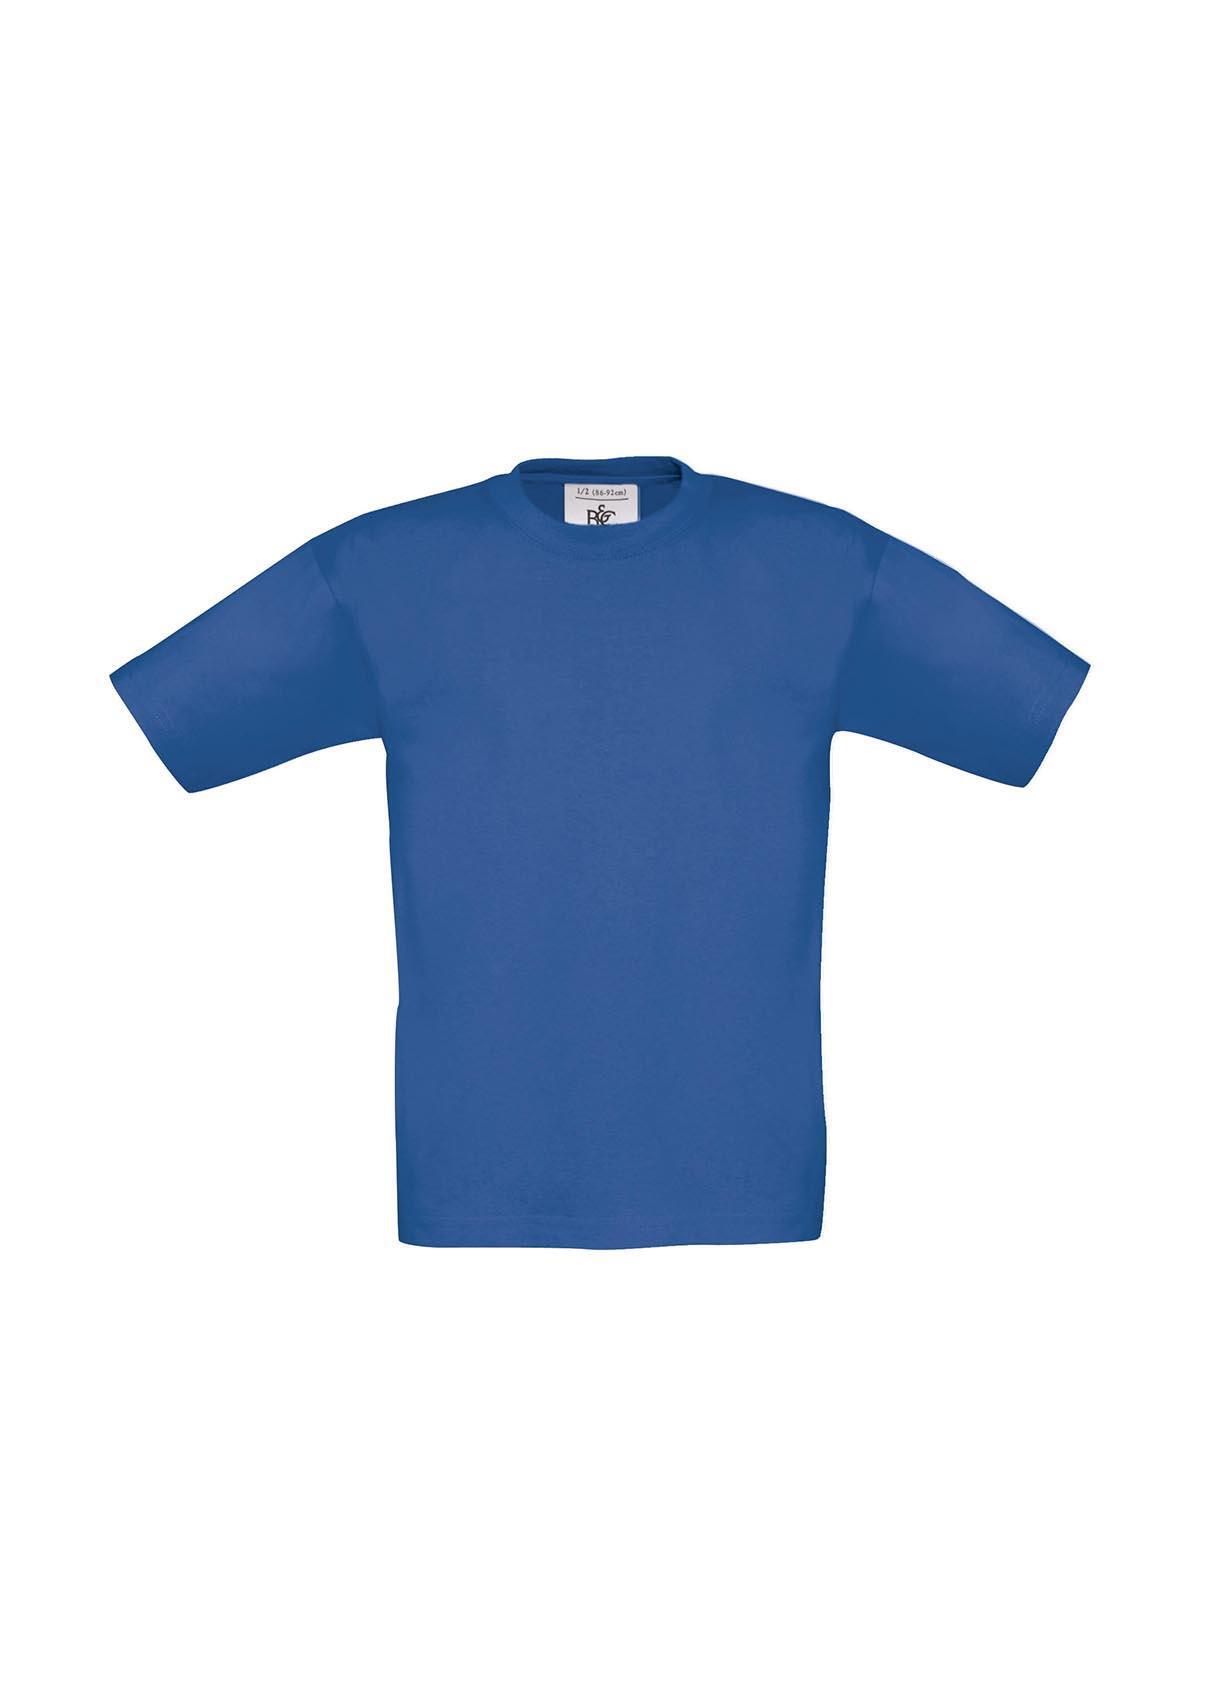 T-shirt voor kids royal blauw kinder shirt